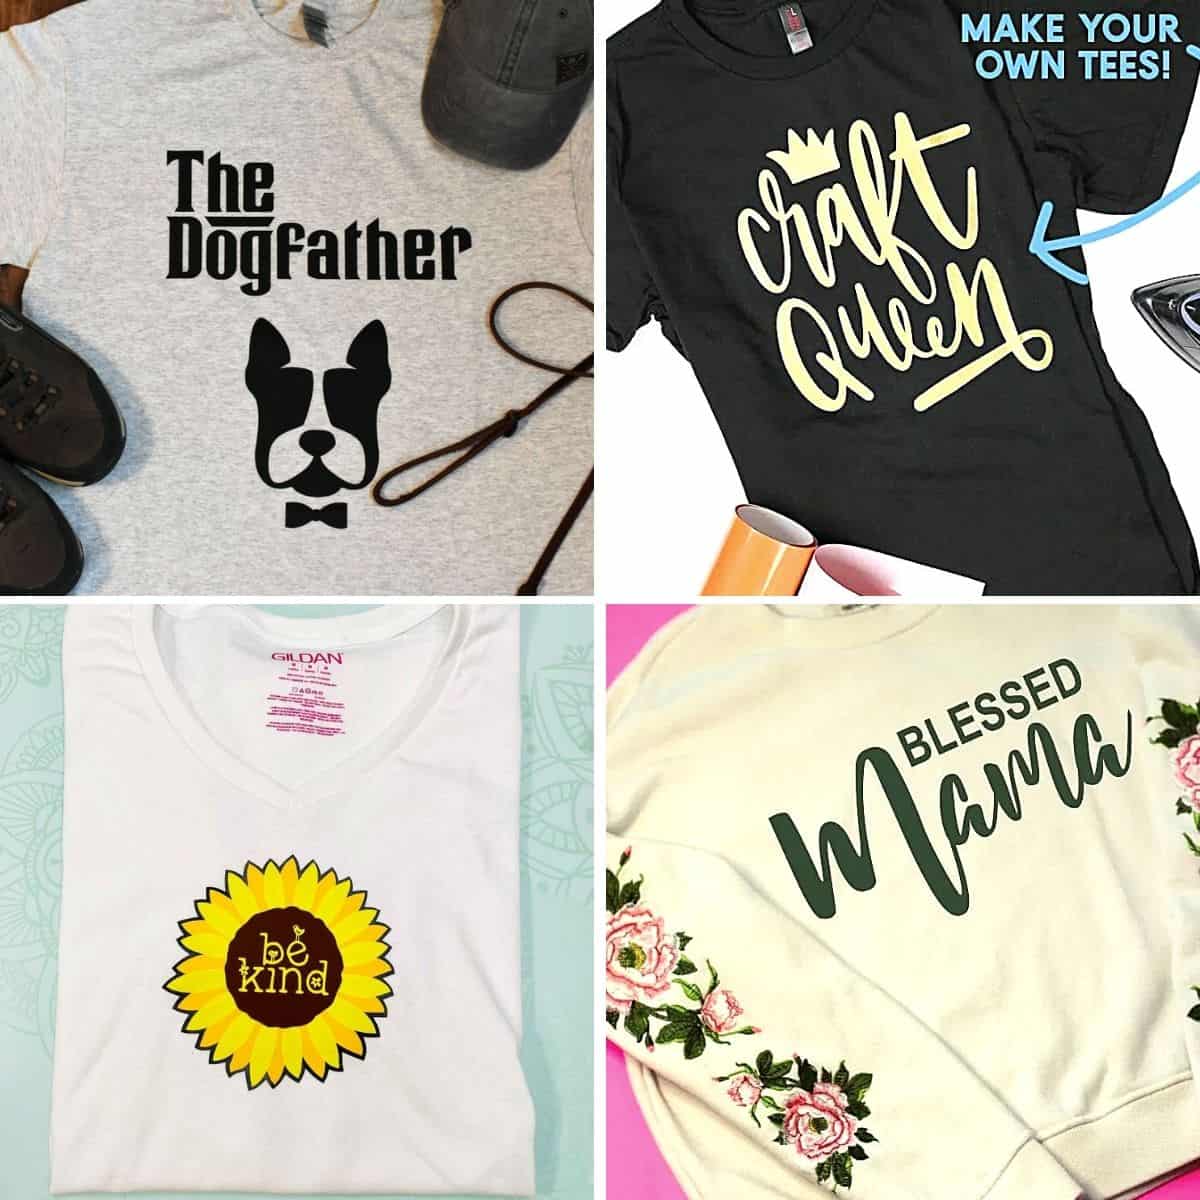 20 Heat Transfer Vinyl Shirts With Cute Designs - The Crafty Blog Stalker